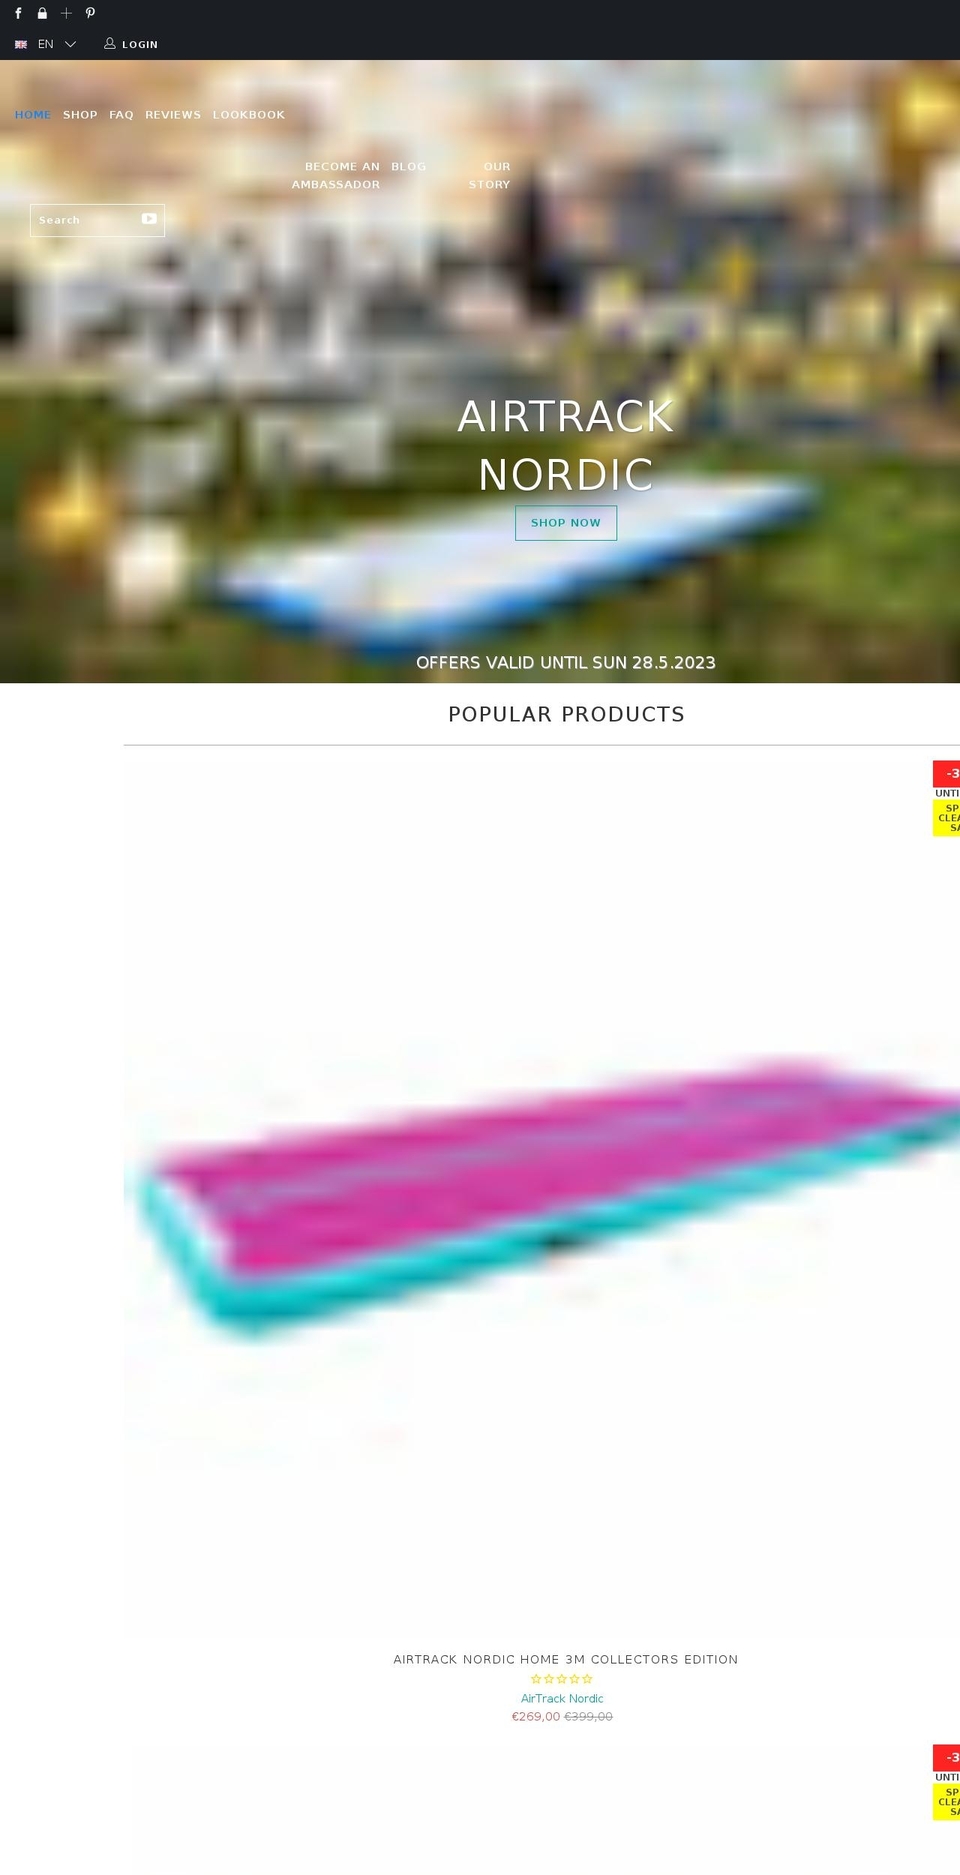 airtracknordic.com shopify website screenshot